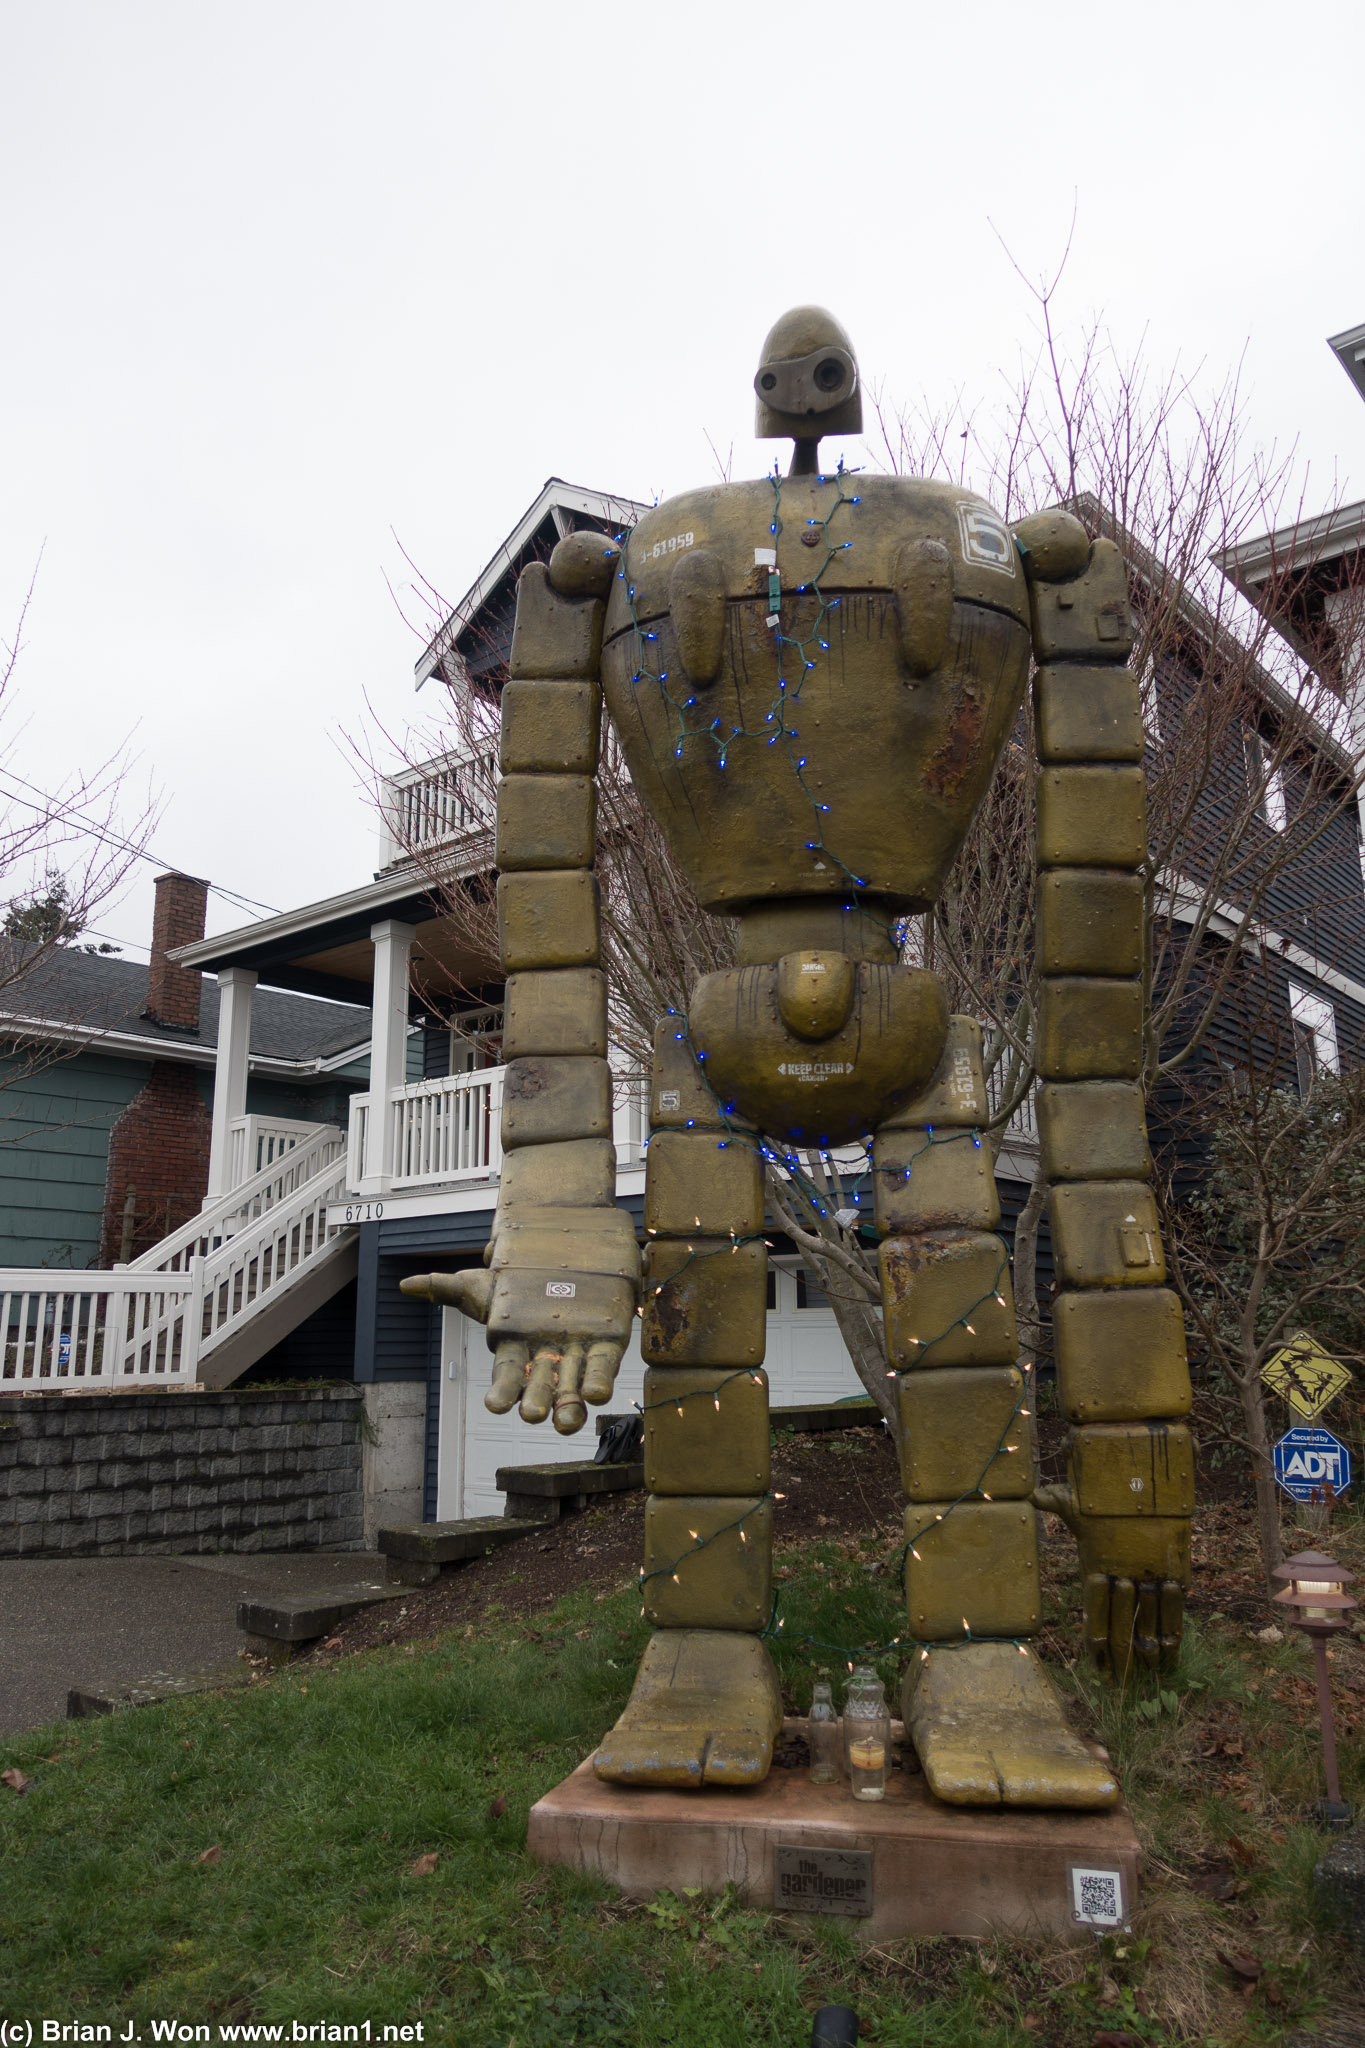 Random robot statue.